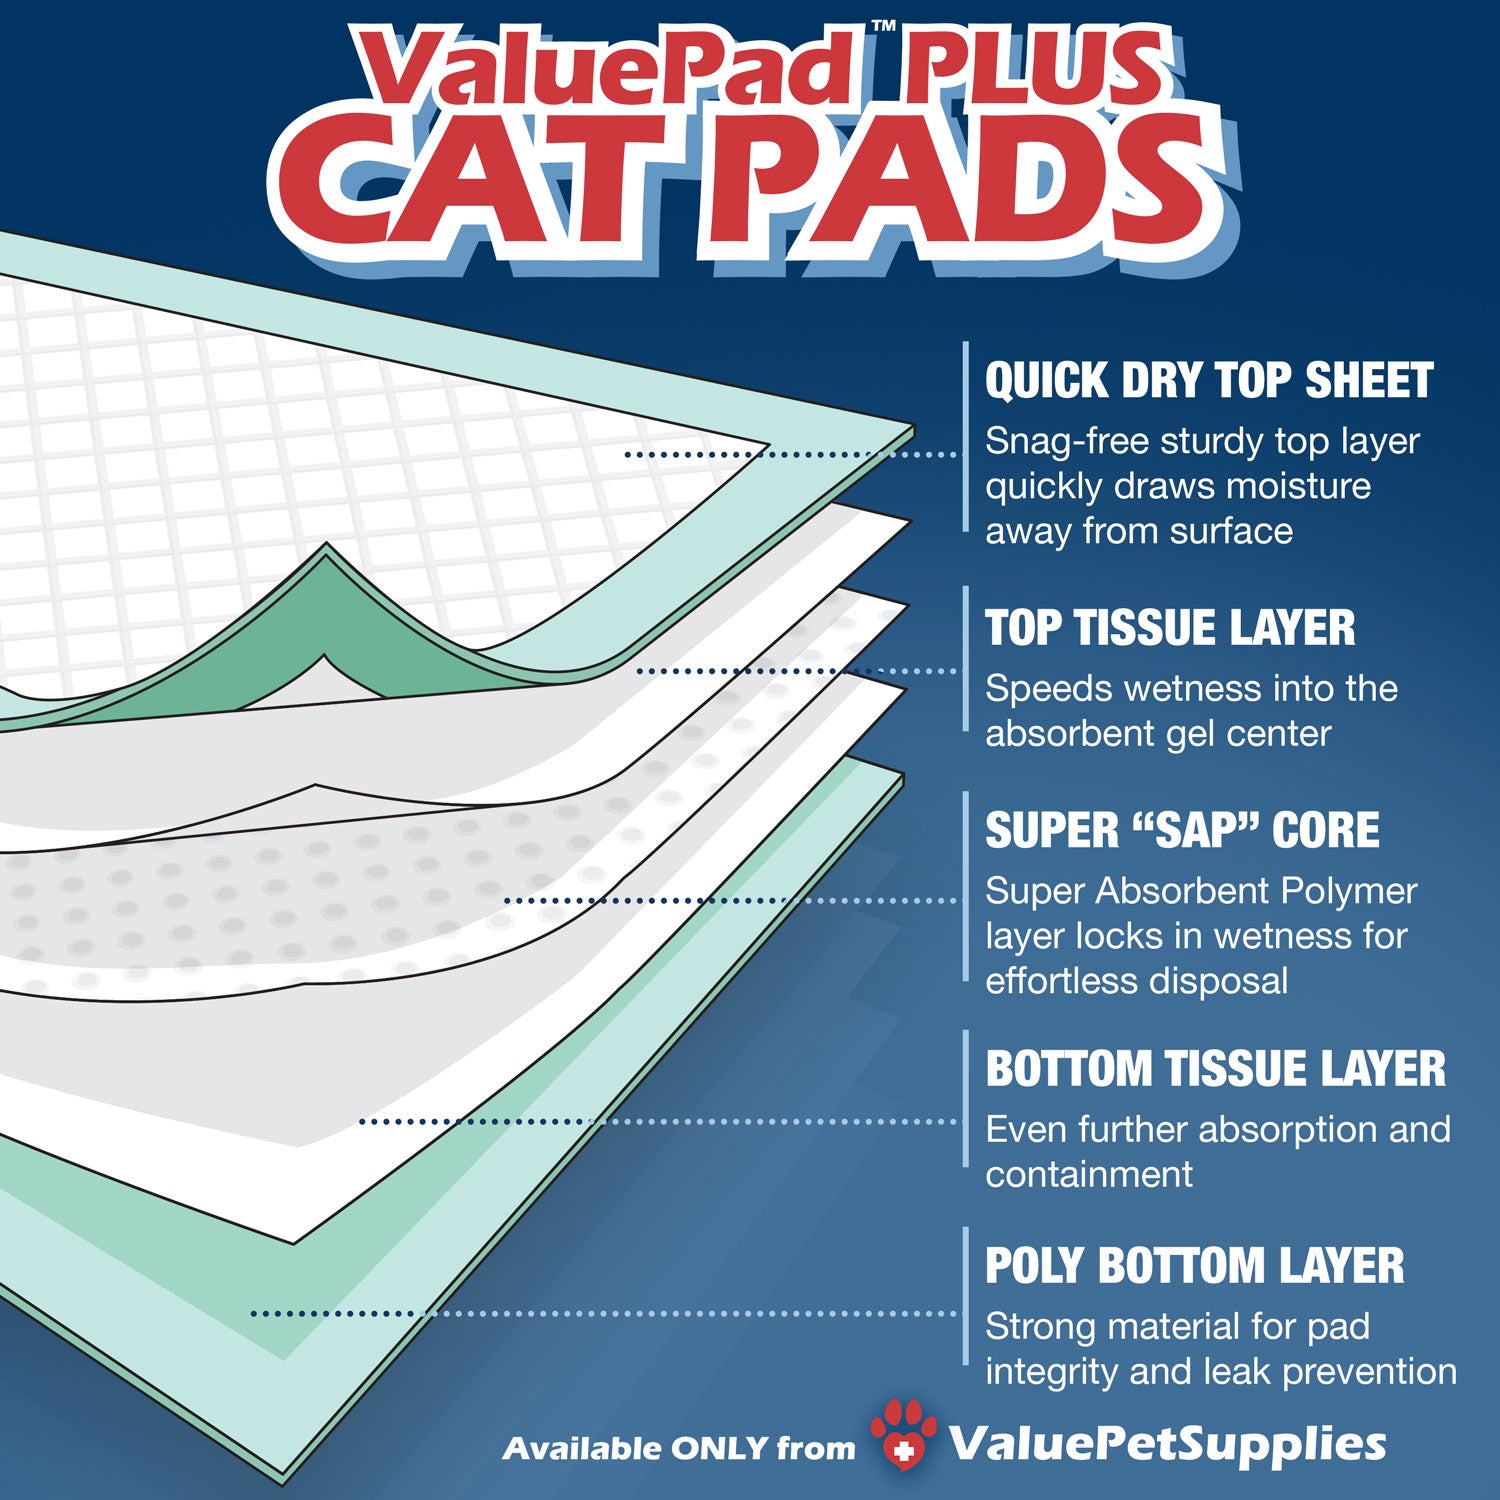 ValuePad Plus Cat Litter Pads, 16.9x11.4 Inch, Unscented, 200 Count - Breeze Compatible Refills BULK PACK